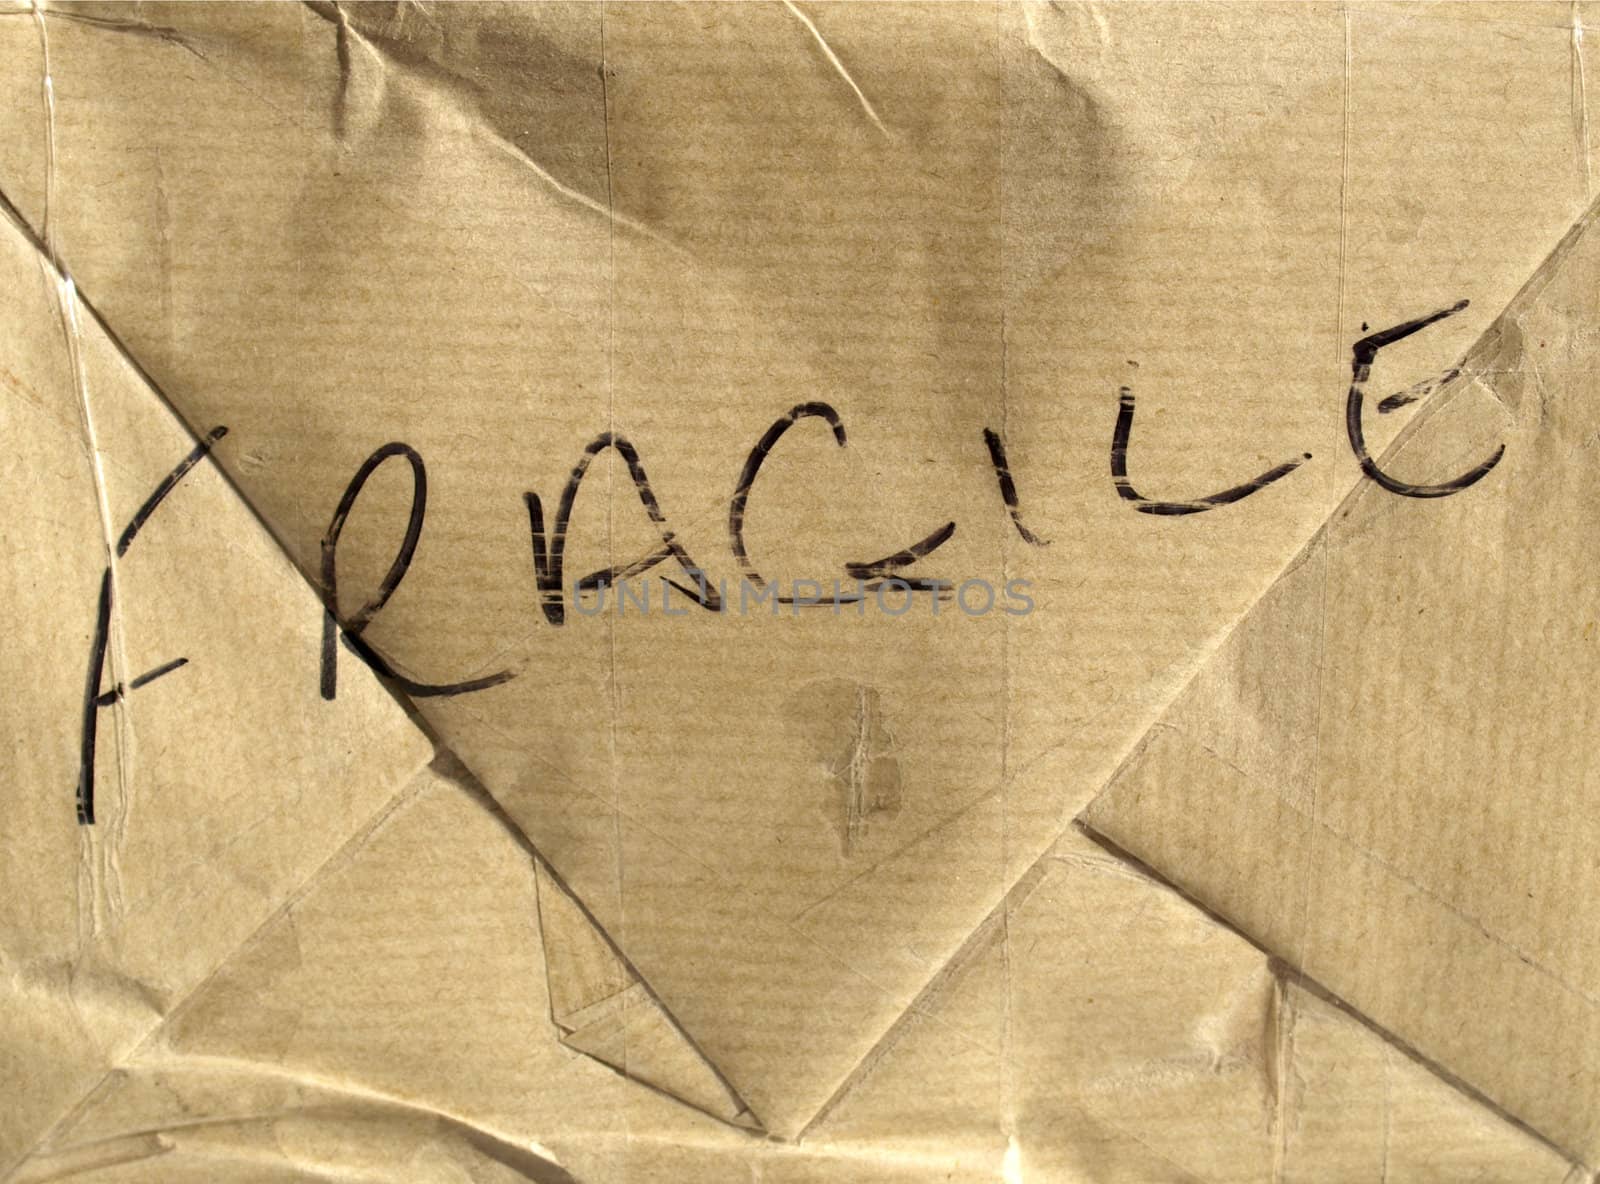 Fragile brown corrugated cardboard packet